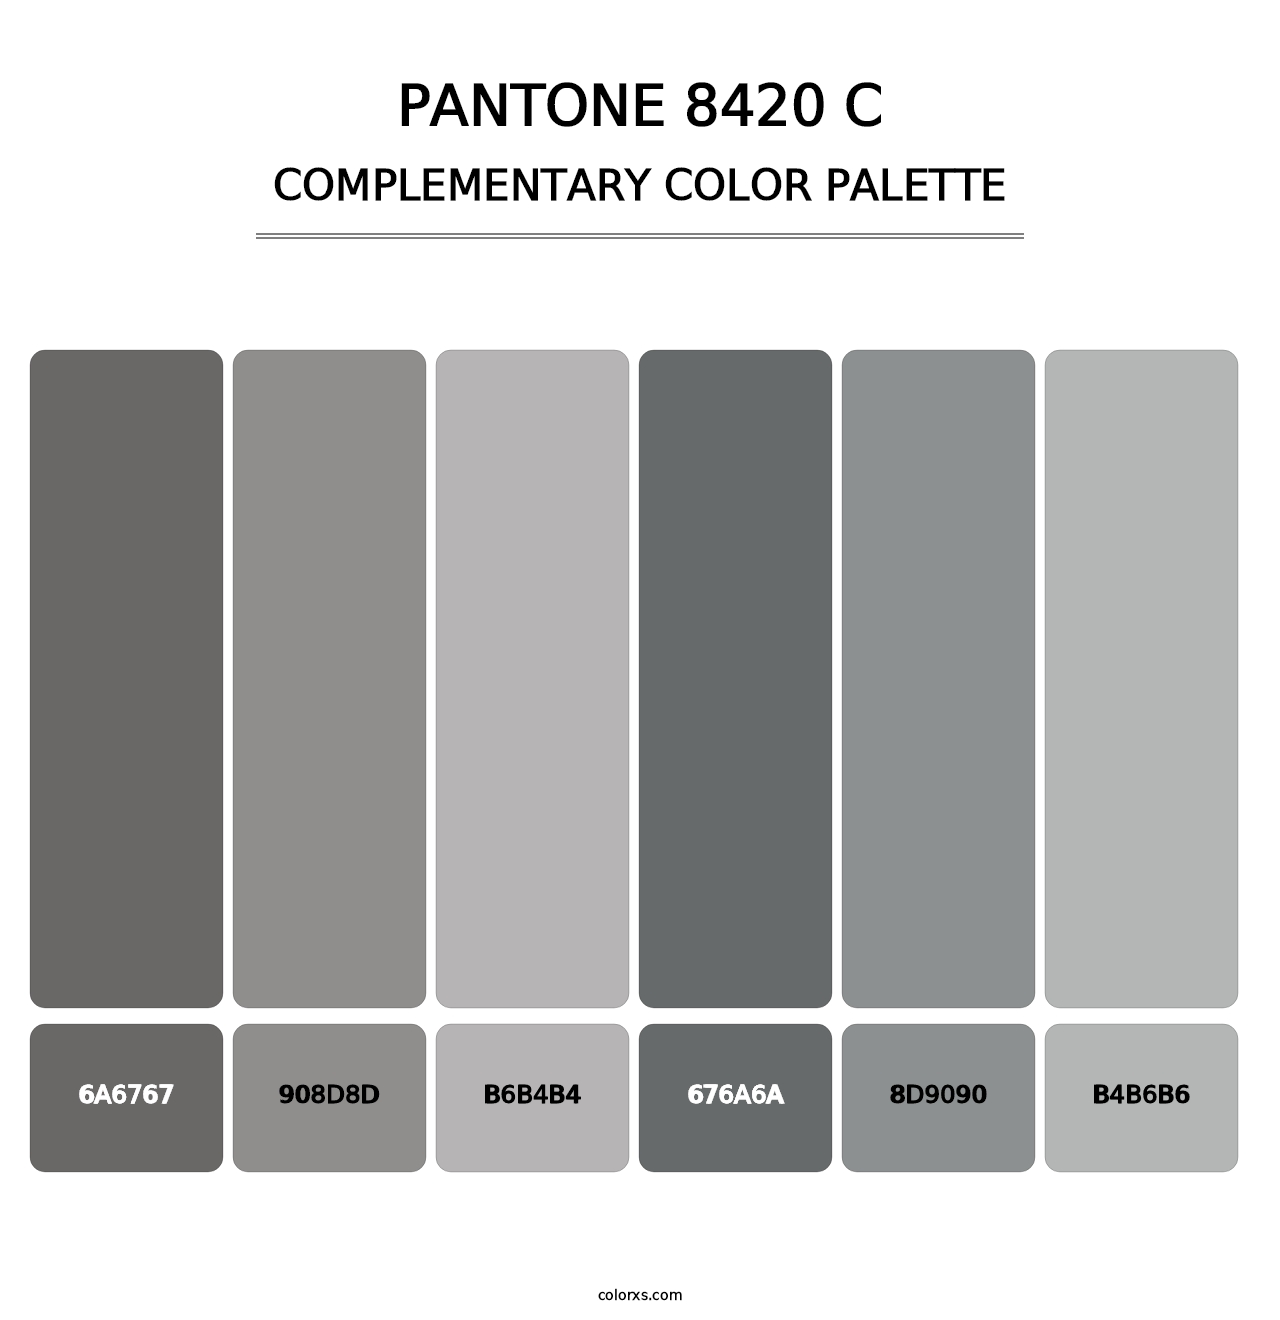 PANTONE 8420 C - Complementary Color Palette